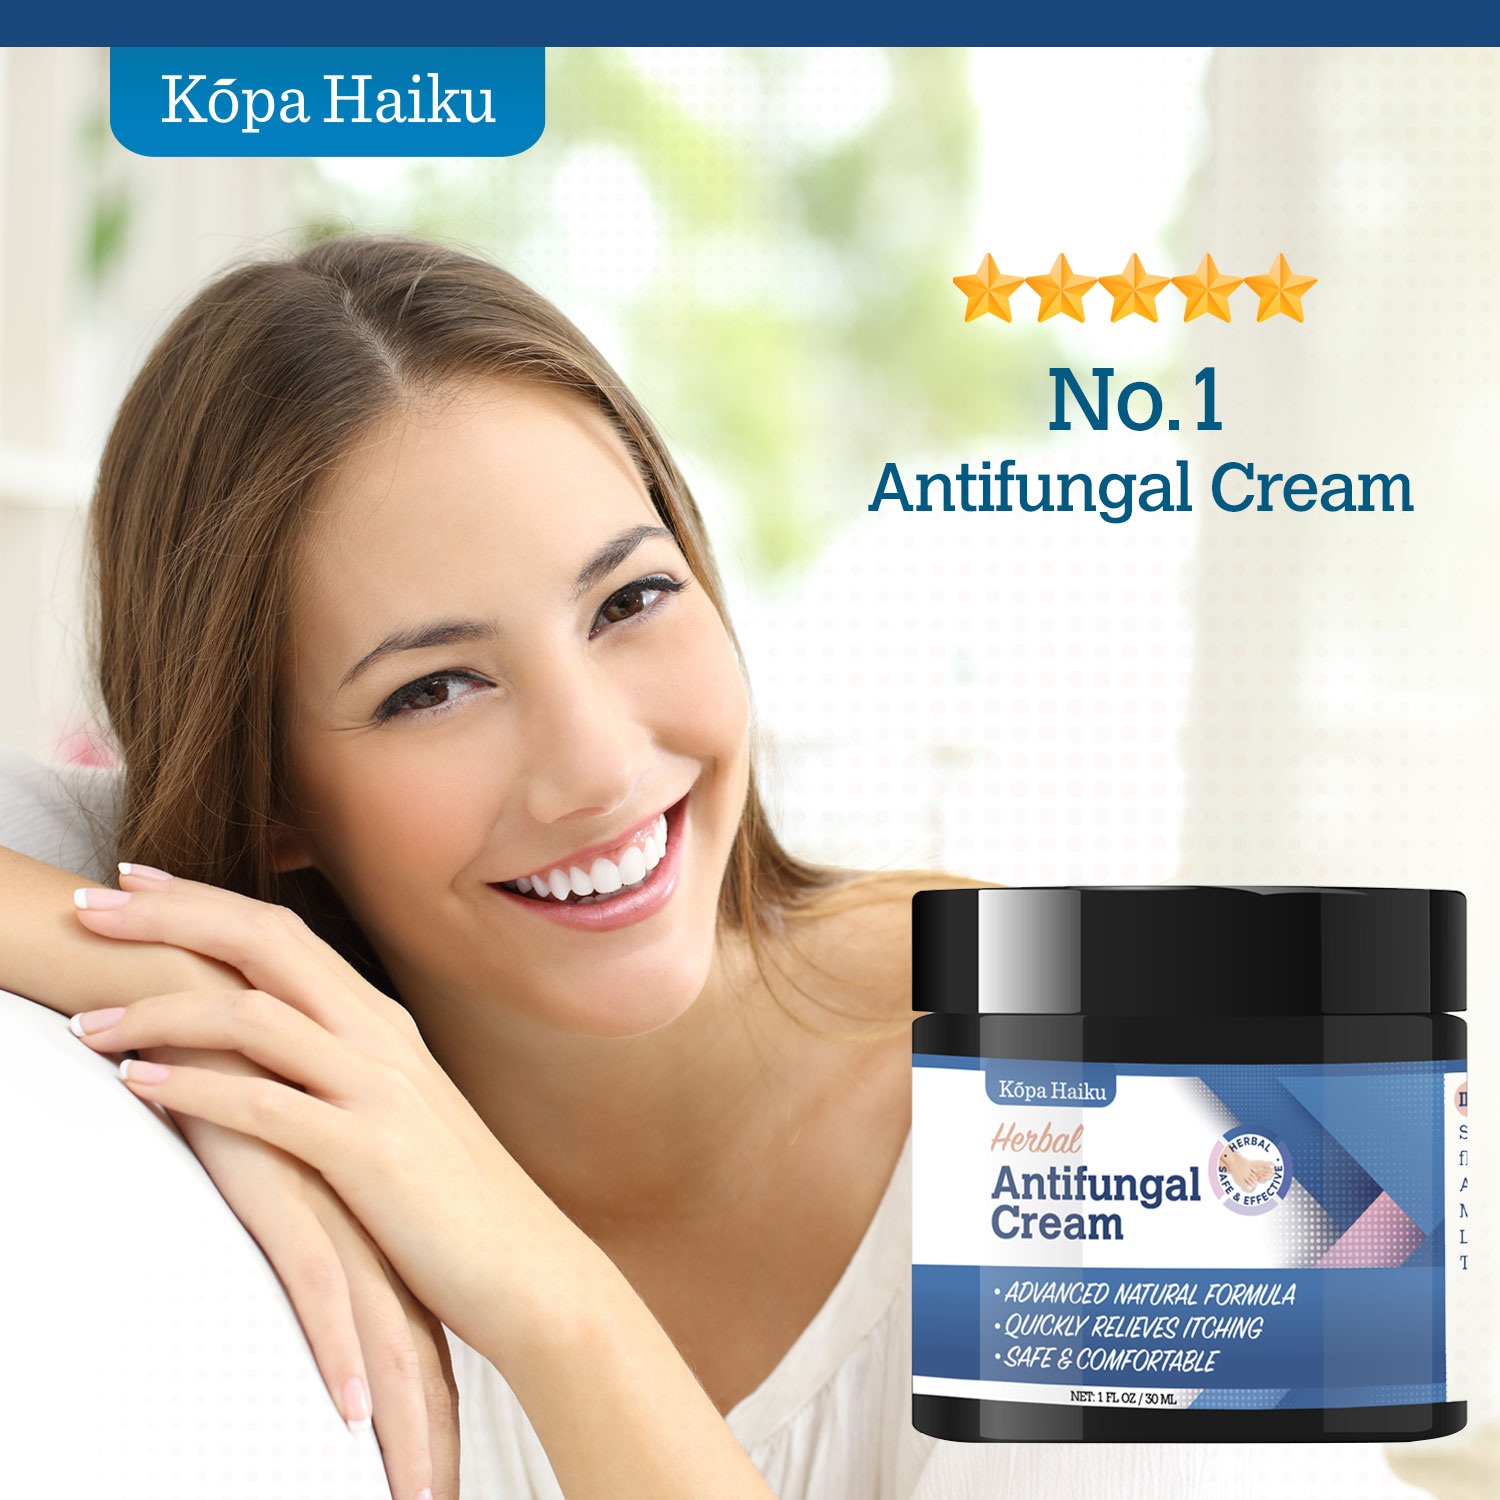 Kopa Haiku Antifungal Cream Anti Itch Cream For Face Body Athletes Foot Ringworm Eczema